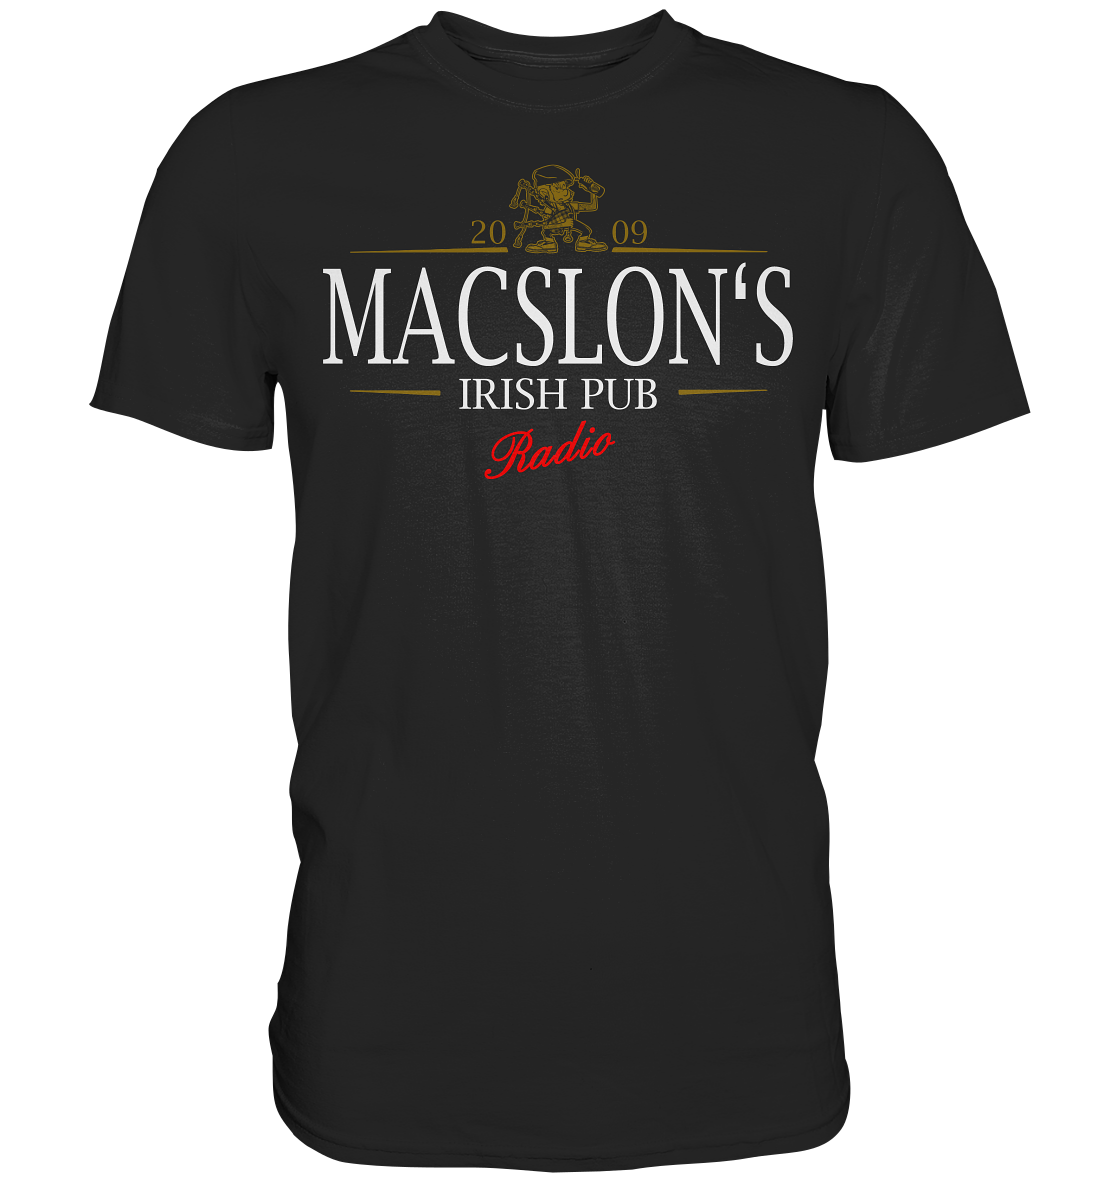 MacSlon's Irish Pub Radio "Stout" - Premium Shirt